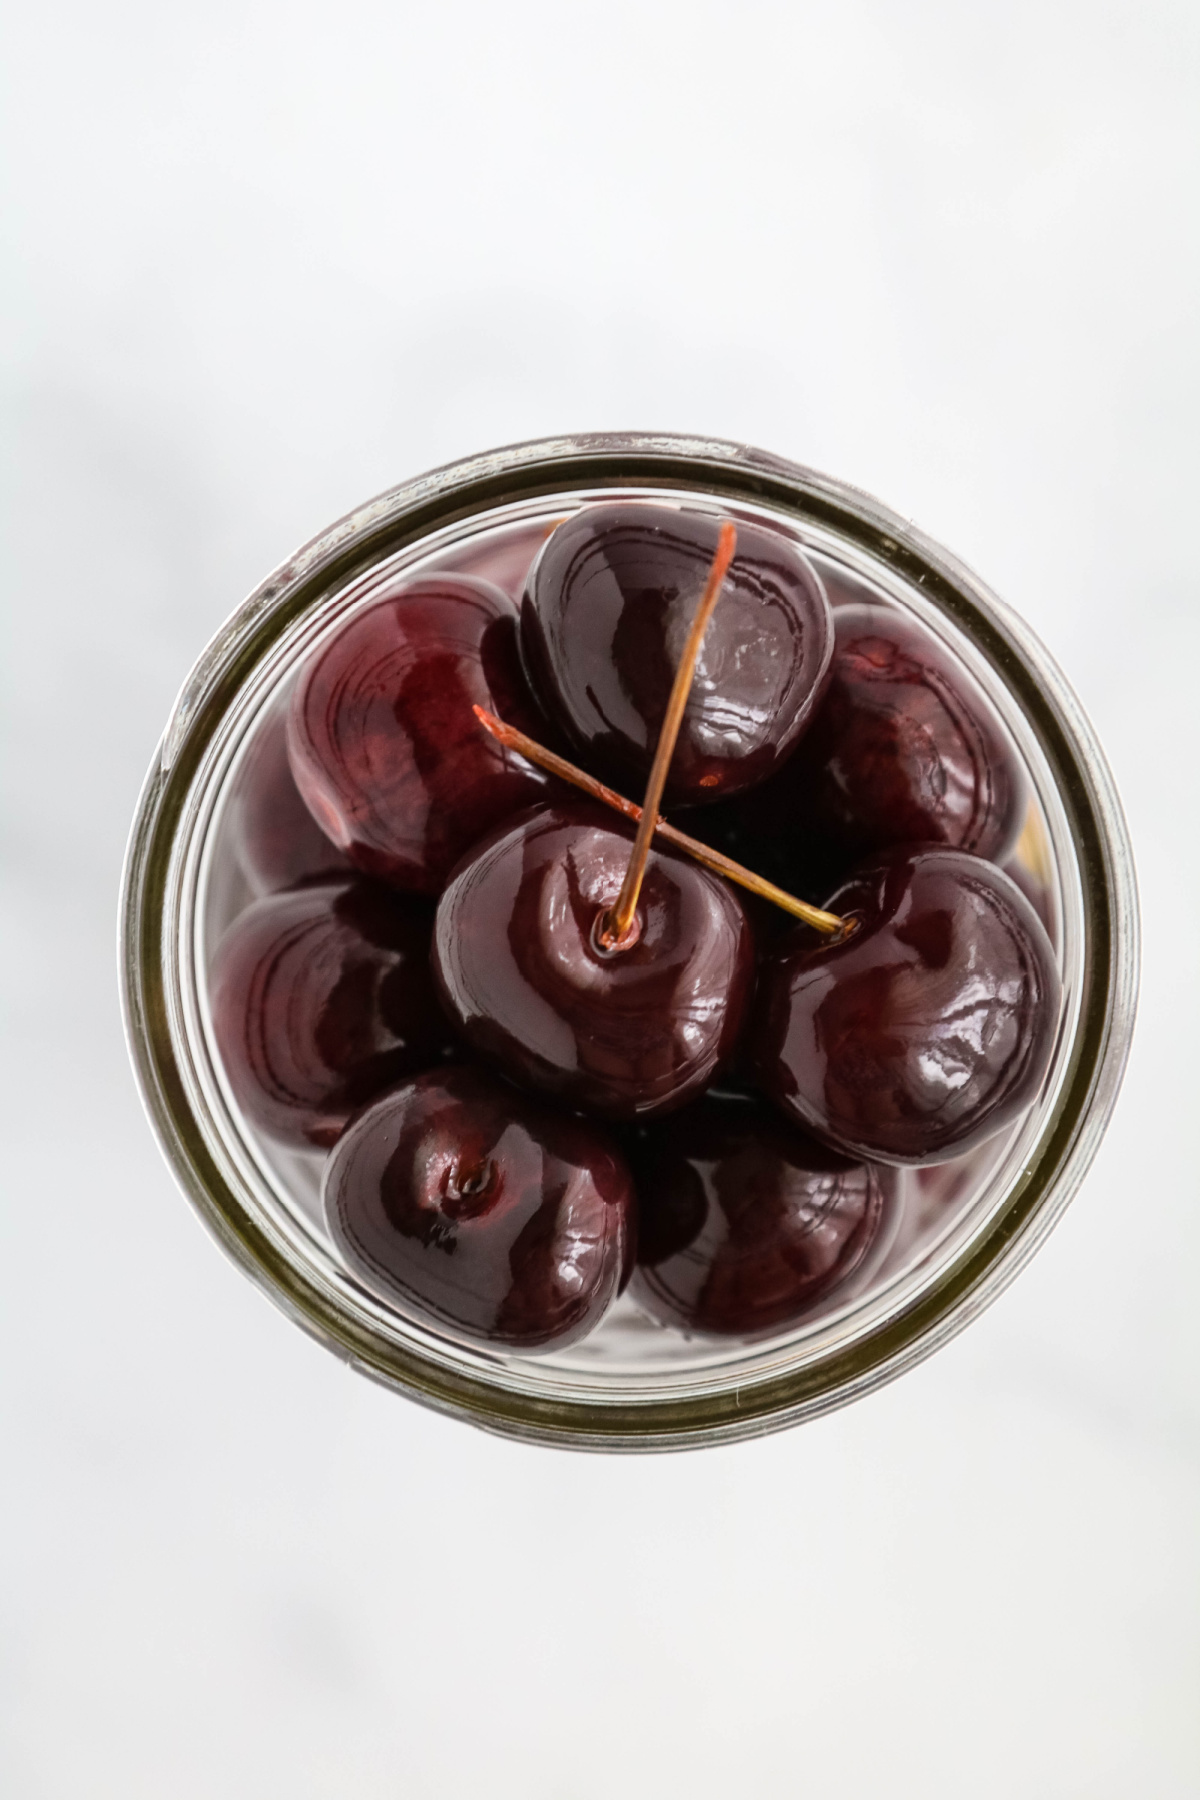 Easy pickled cherries recipe